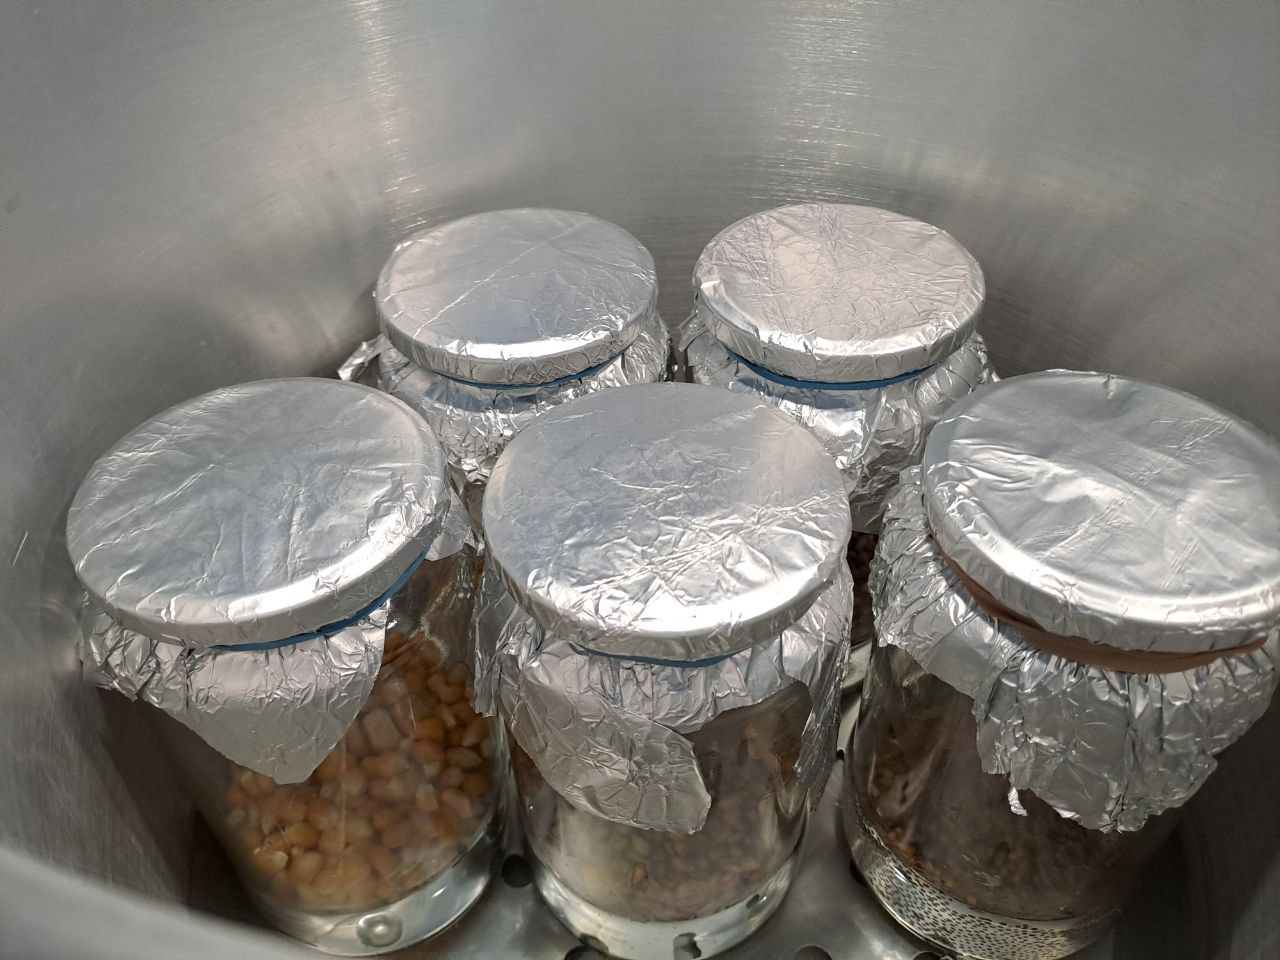 5 grain jars in pressure cooker